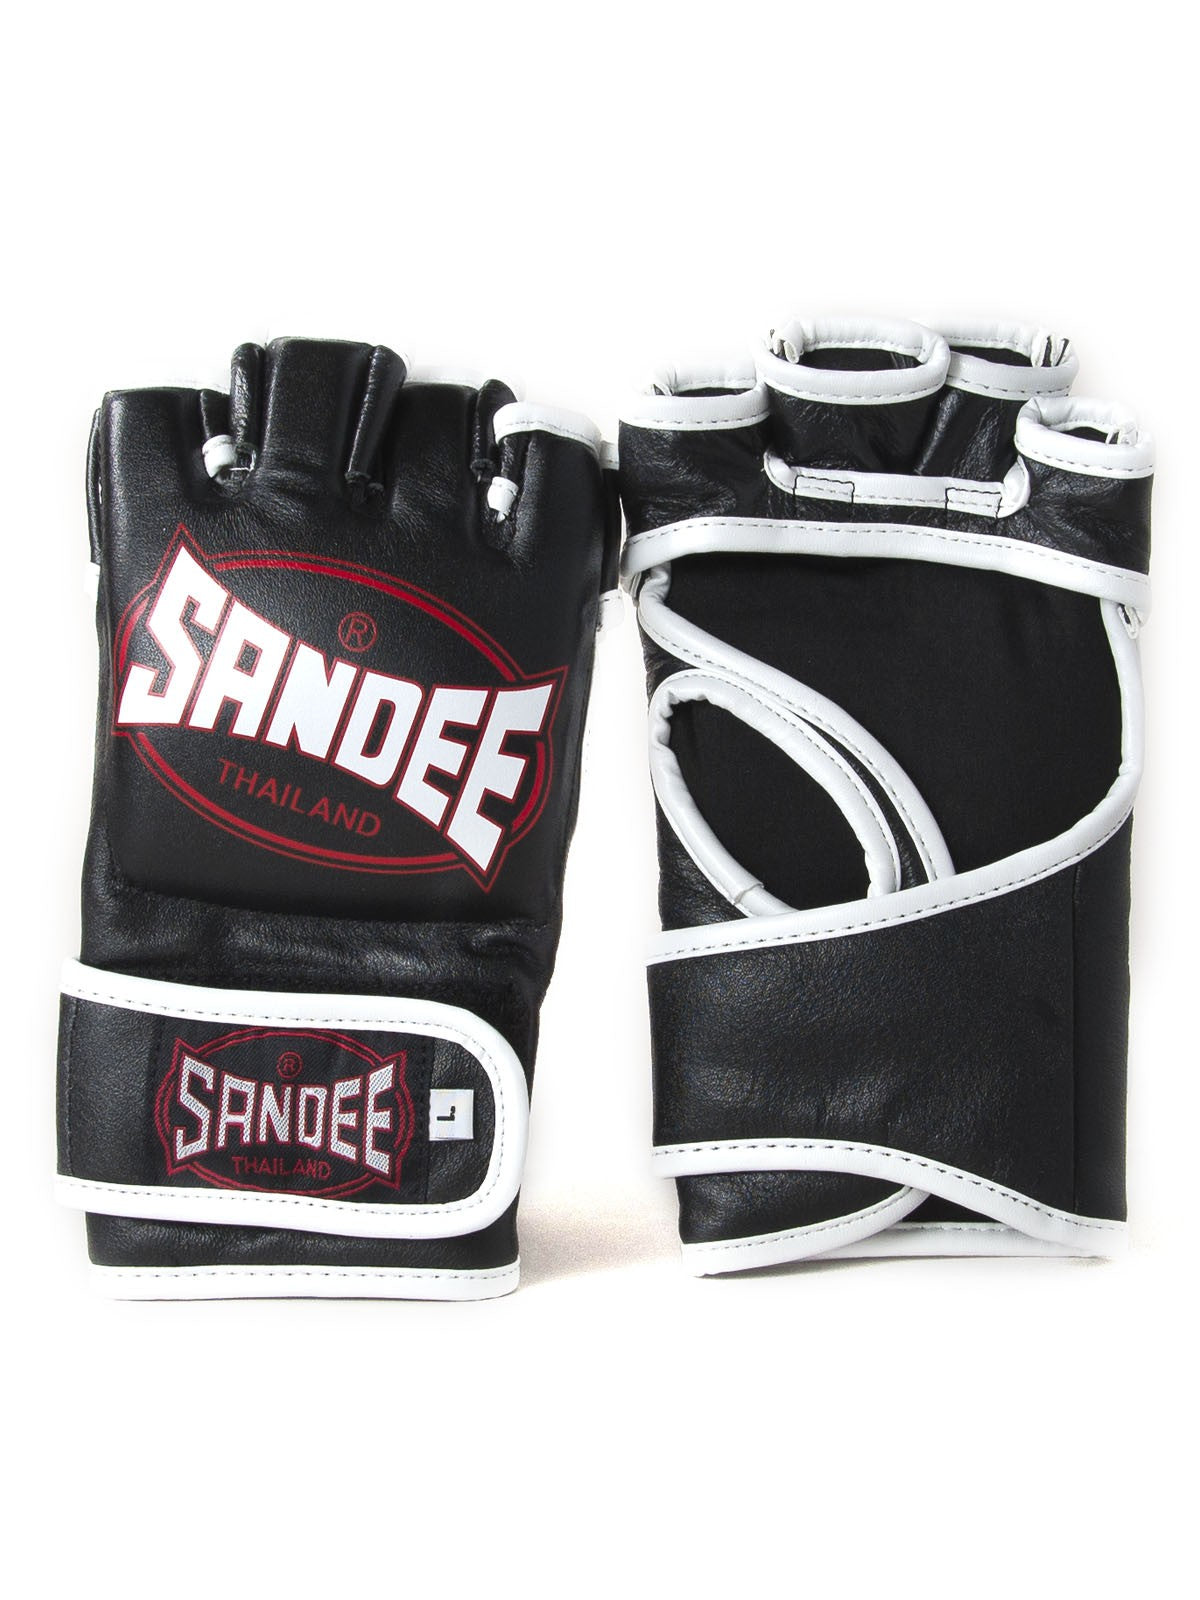 Sandee Leather MMA Fight Glove